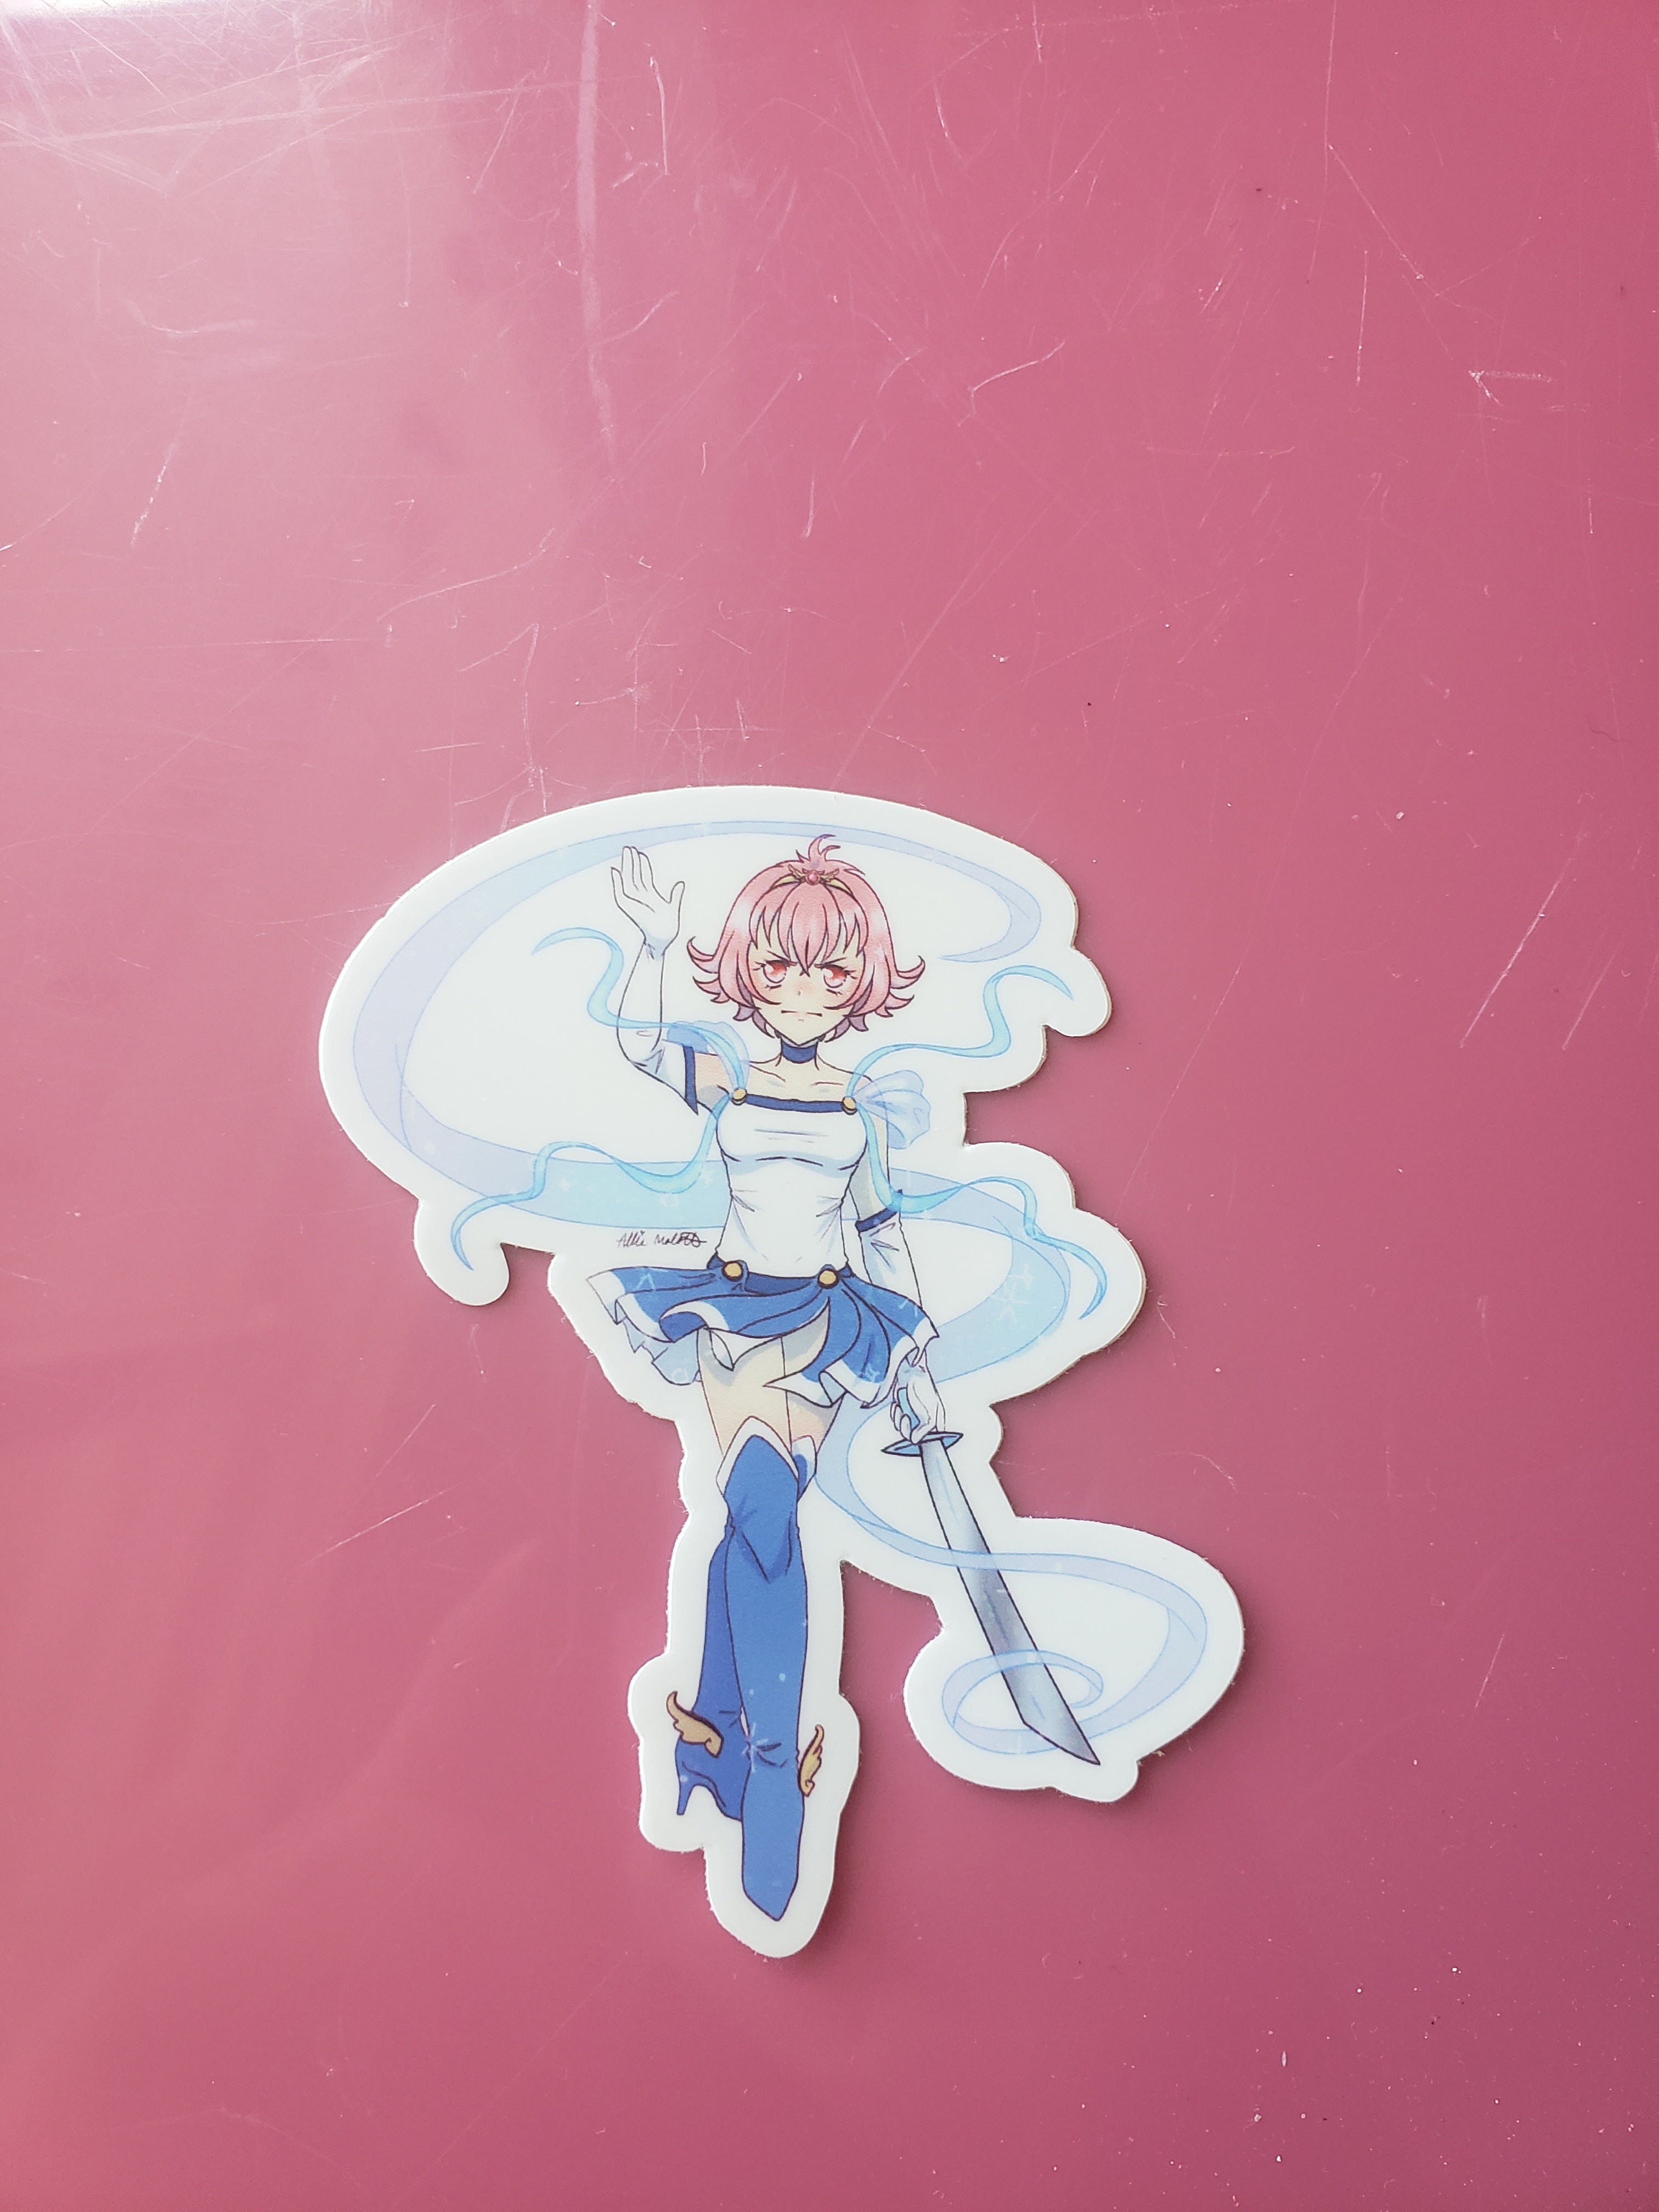 Vinyl sticker Pretear of Wind magical girl new legend of snow white anime manga art 3 inch